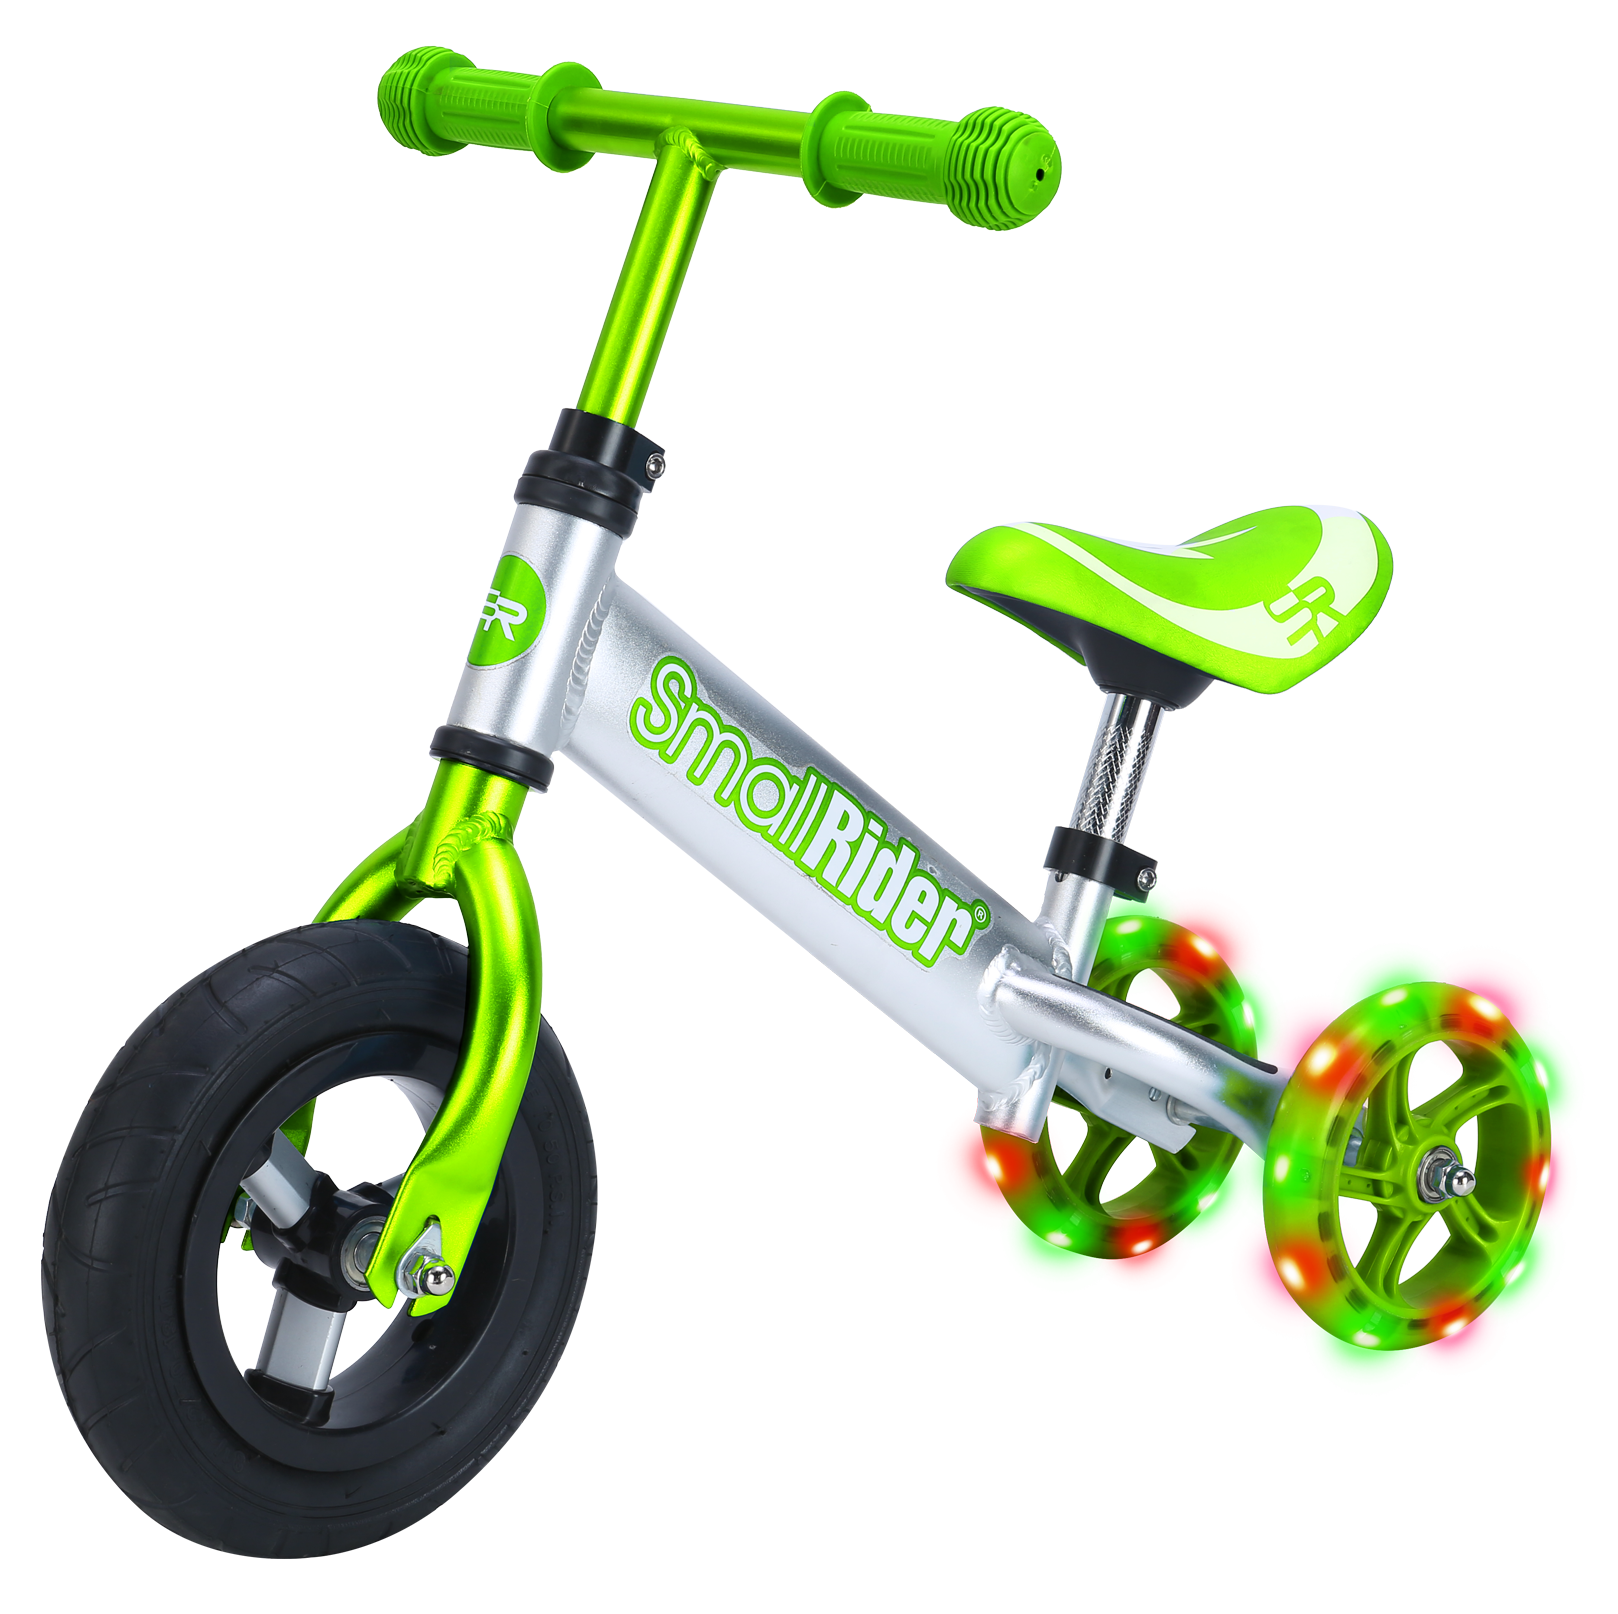 Беговел-трансформер Small Rider Foot Racer mini зеленый беговел со спец эффектами small rider nitro зеленый